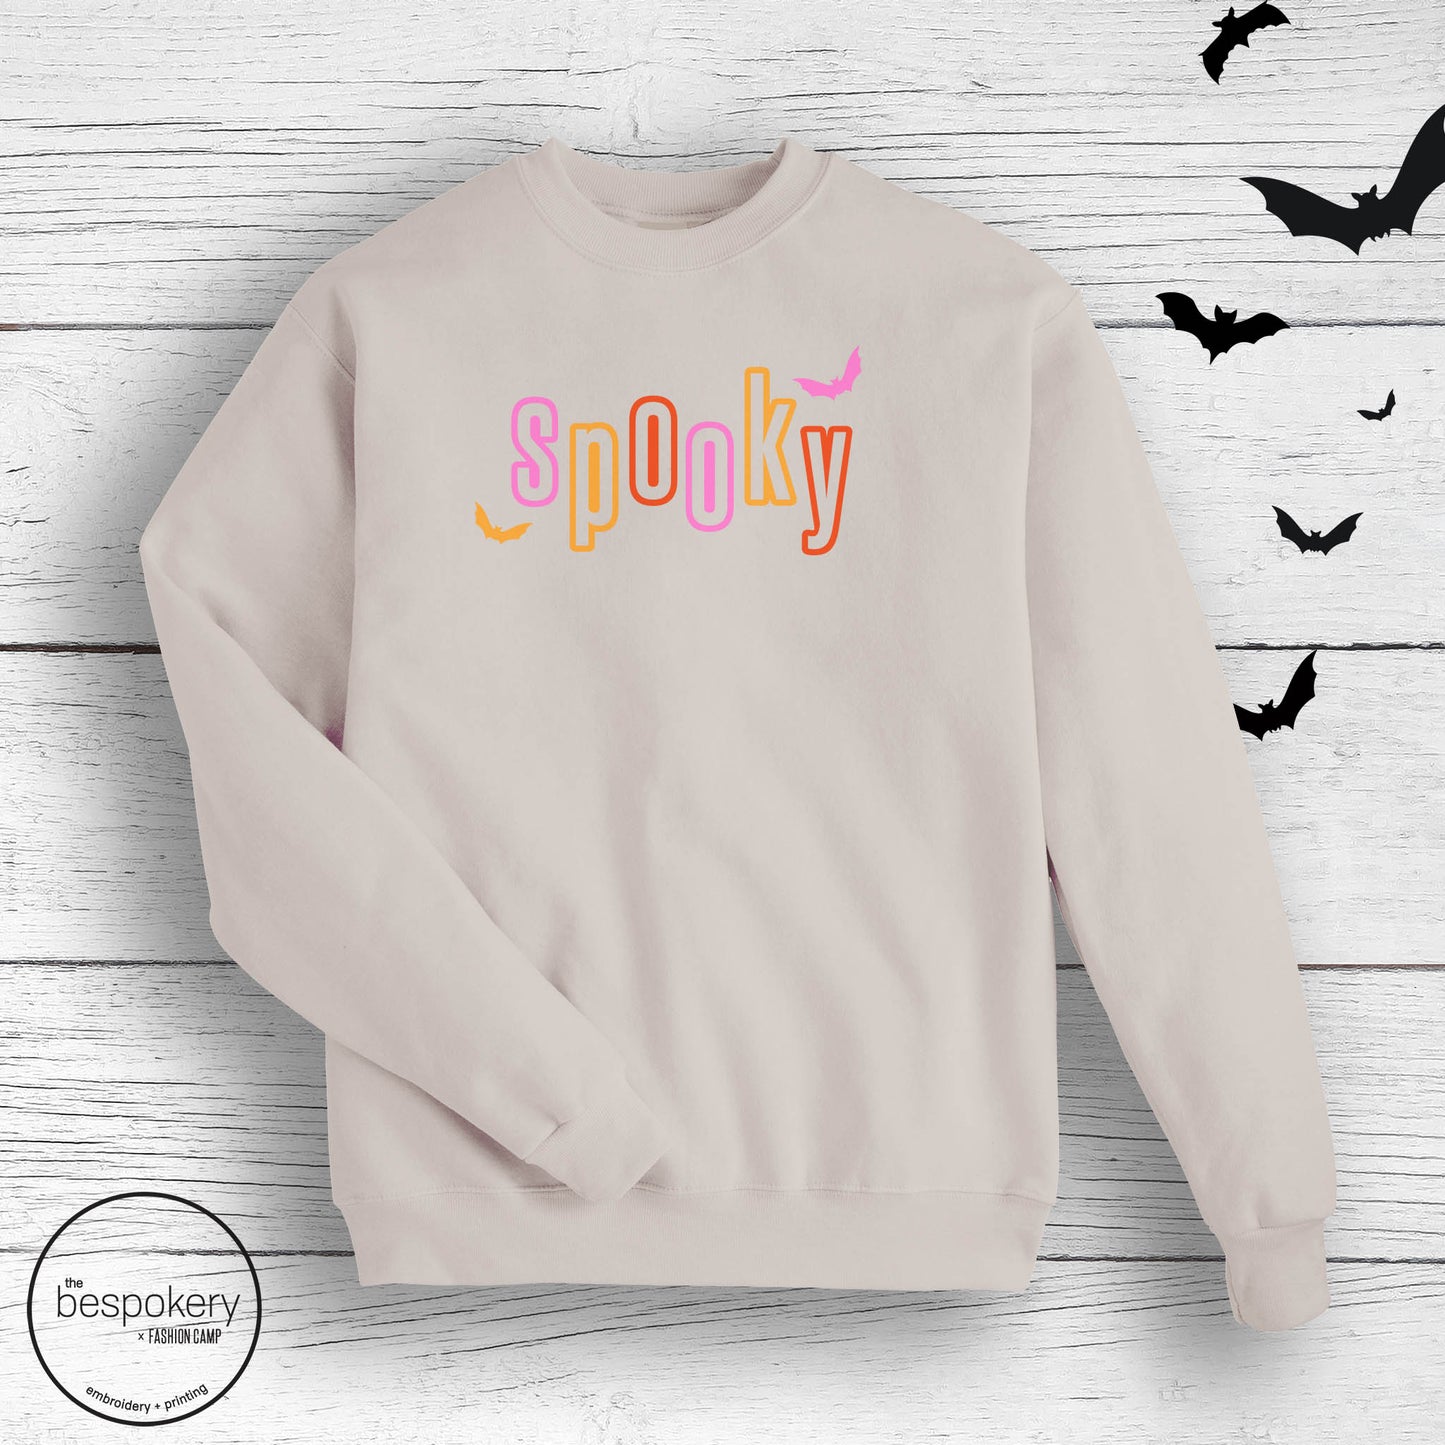 "Spooky" - Sand Sweatshirt (Adult only)